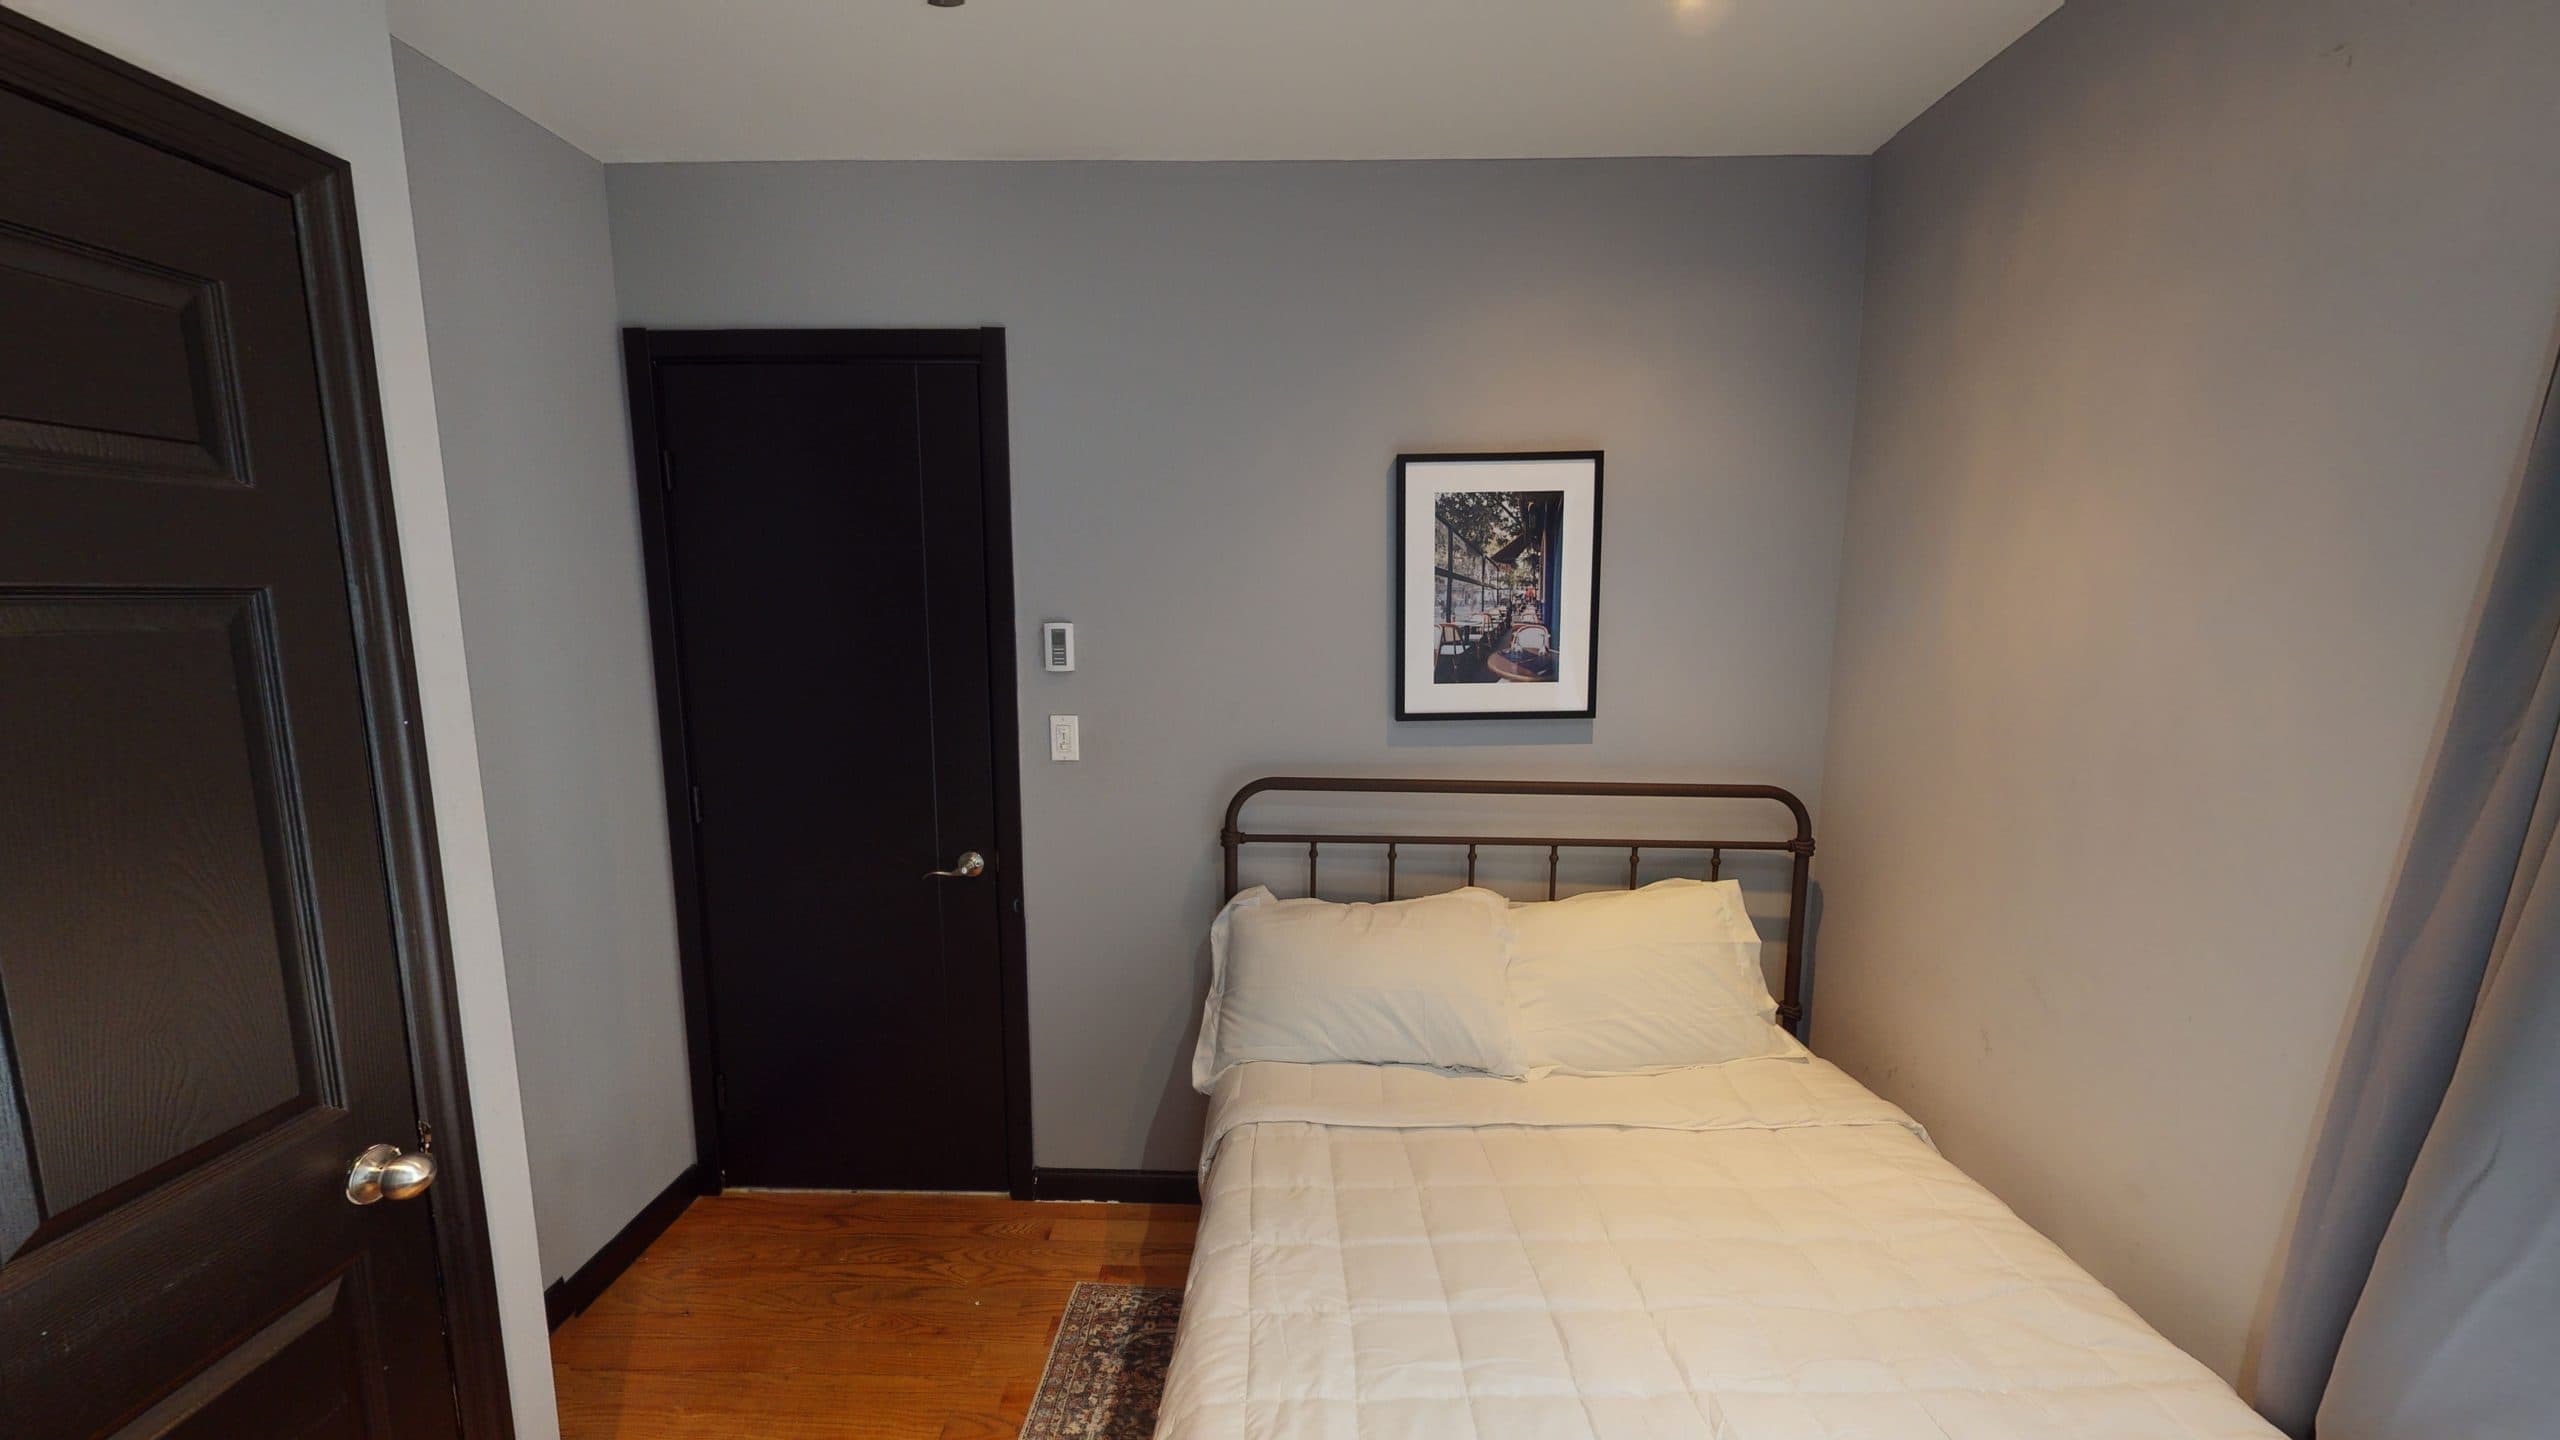 Photo 2 of #1512: Full Bedroom B at June Homes